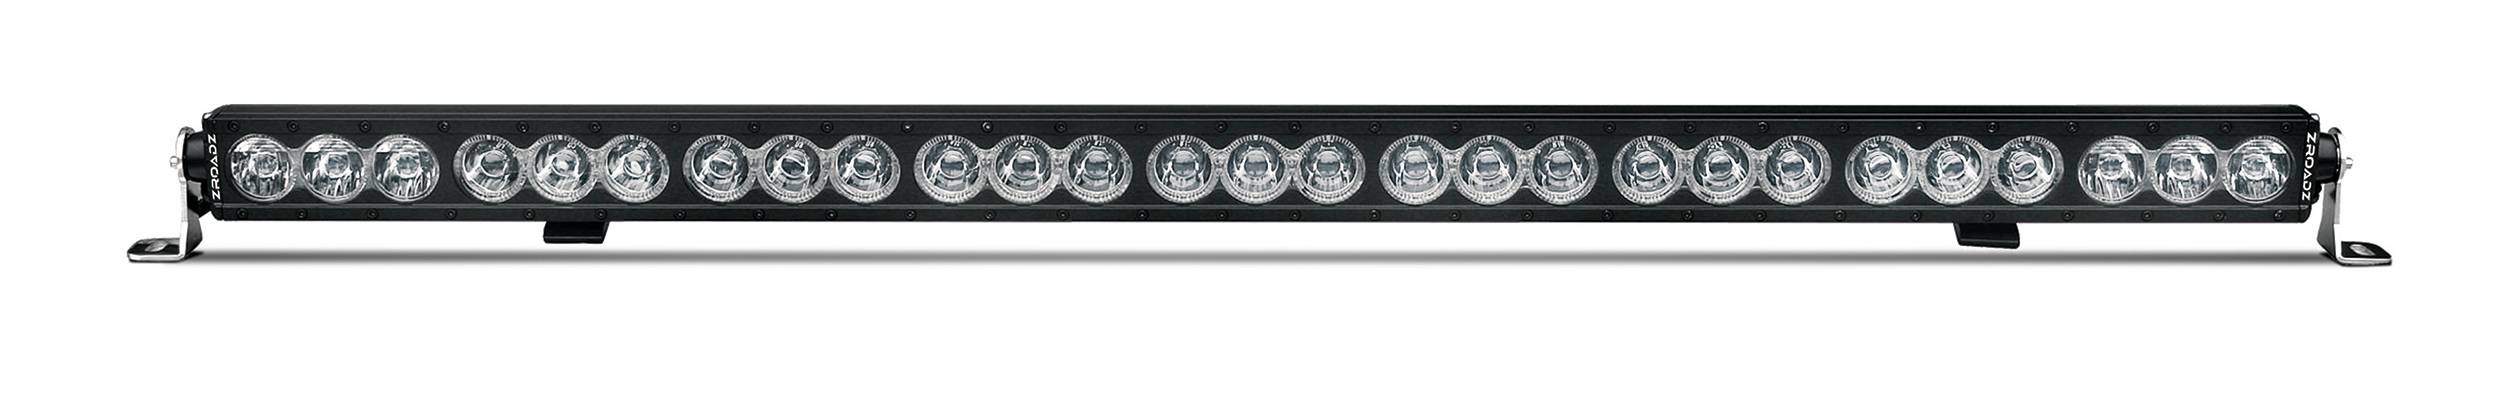 ZROADZ OFF ROAD PRODUCTS - 50 Inch LED Straight Single Row Tri Beam Light Bar - Part # Z30NTM01-50